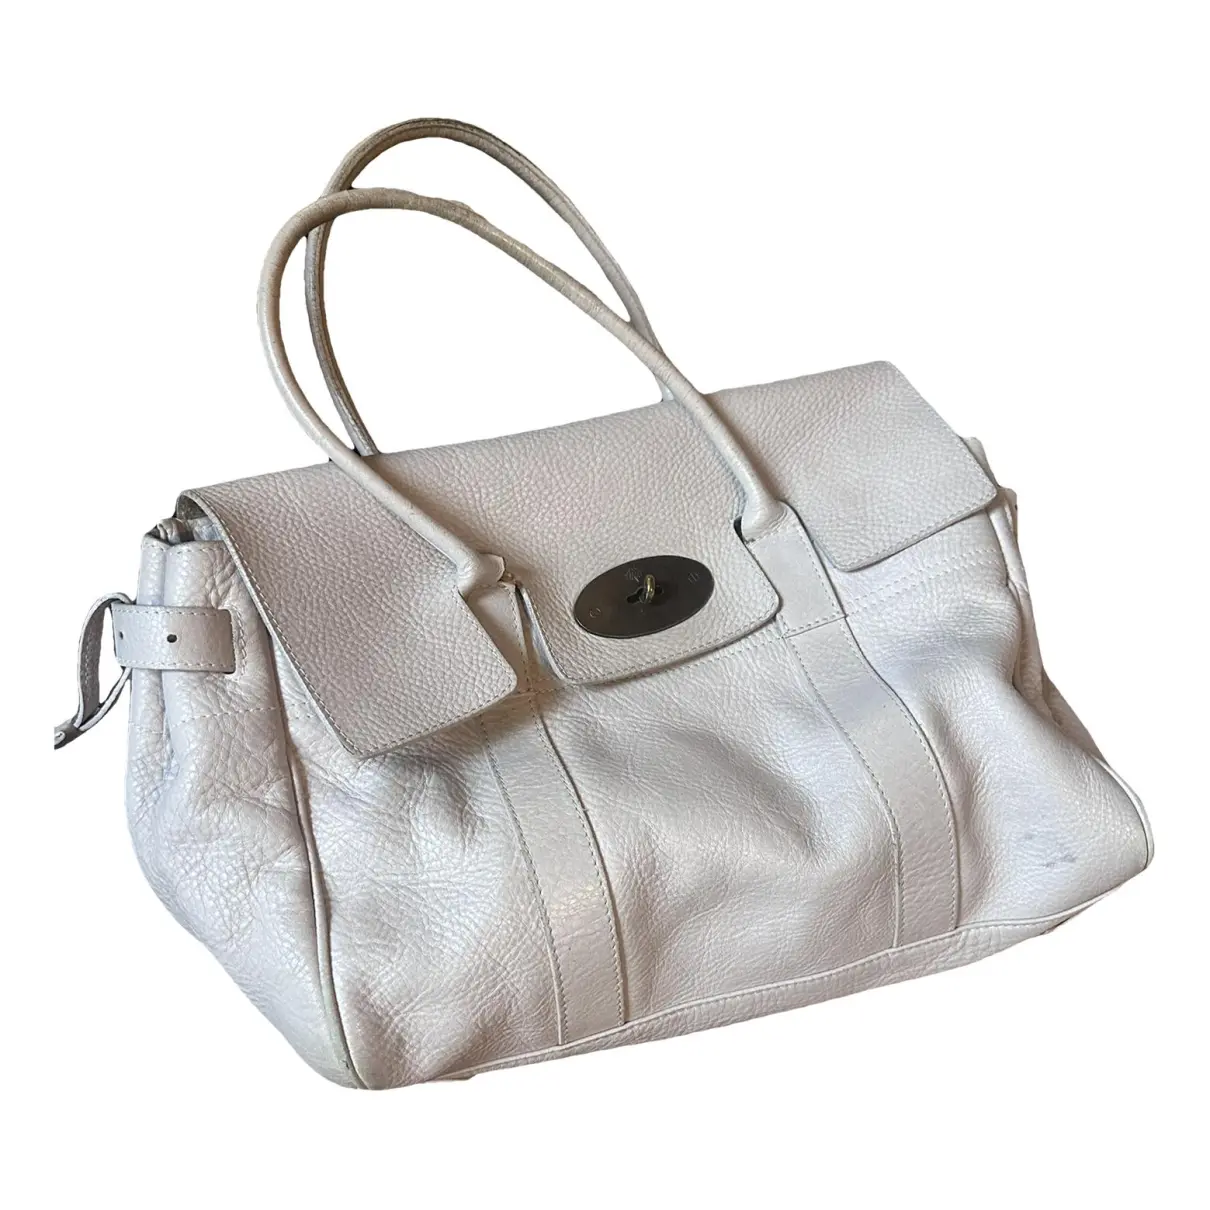 Bayswater leather satchel